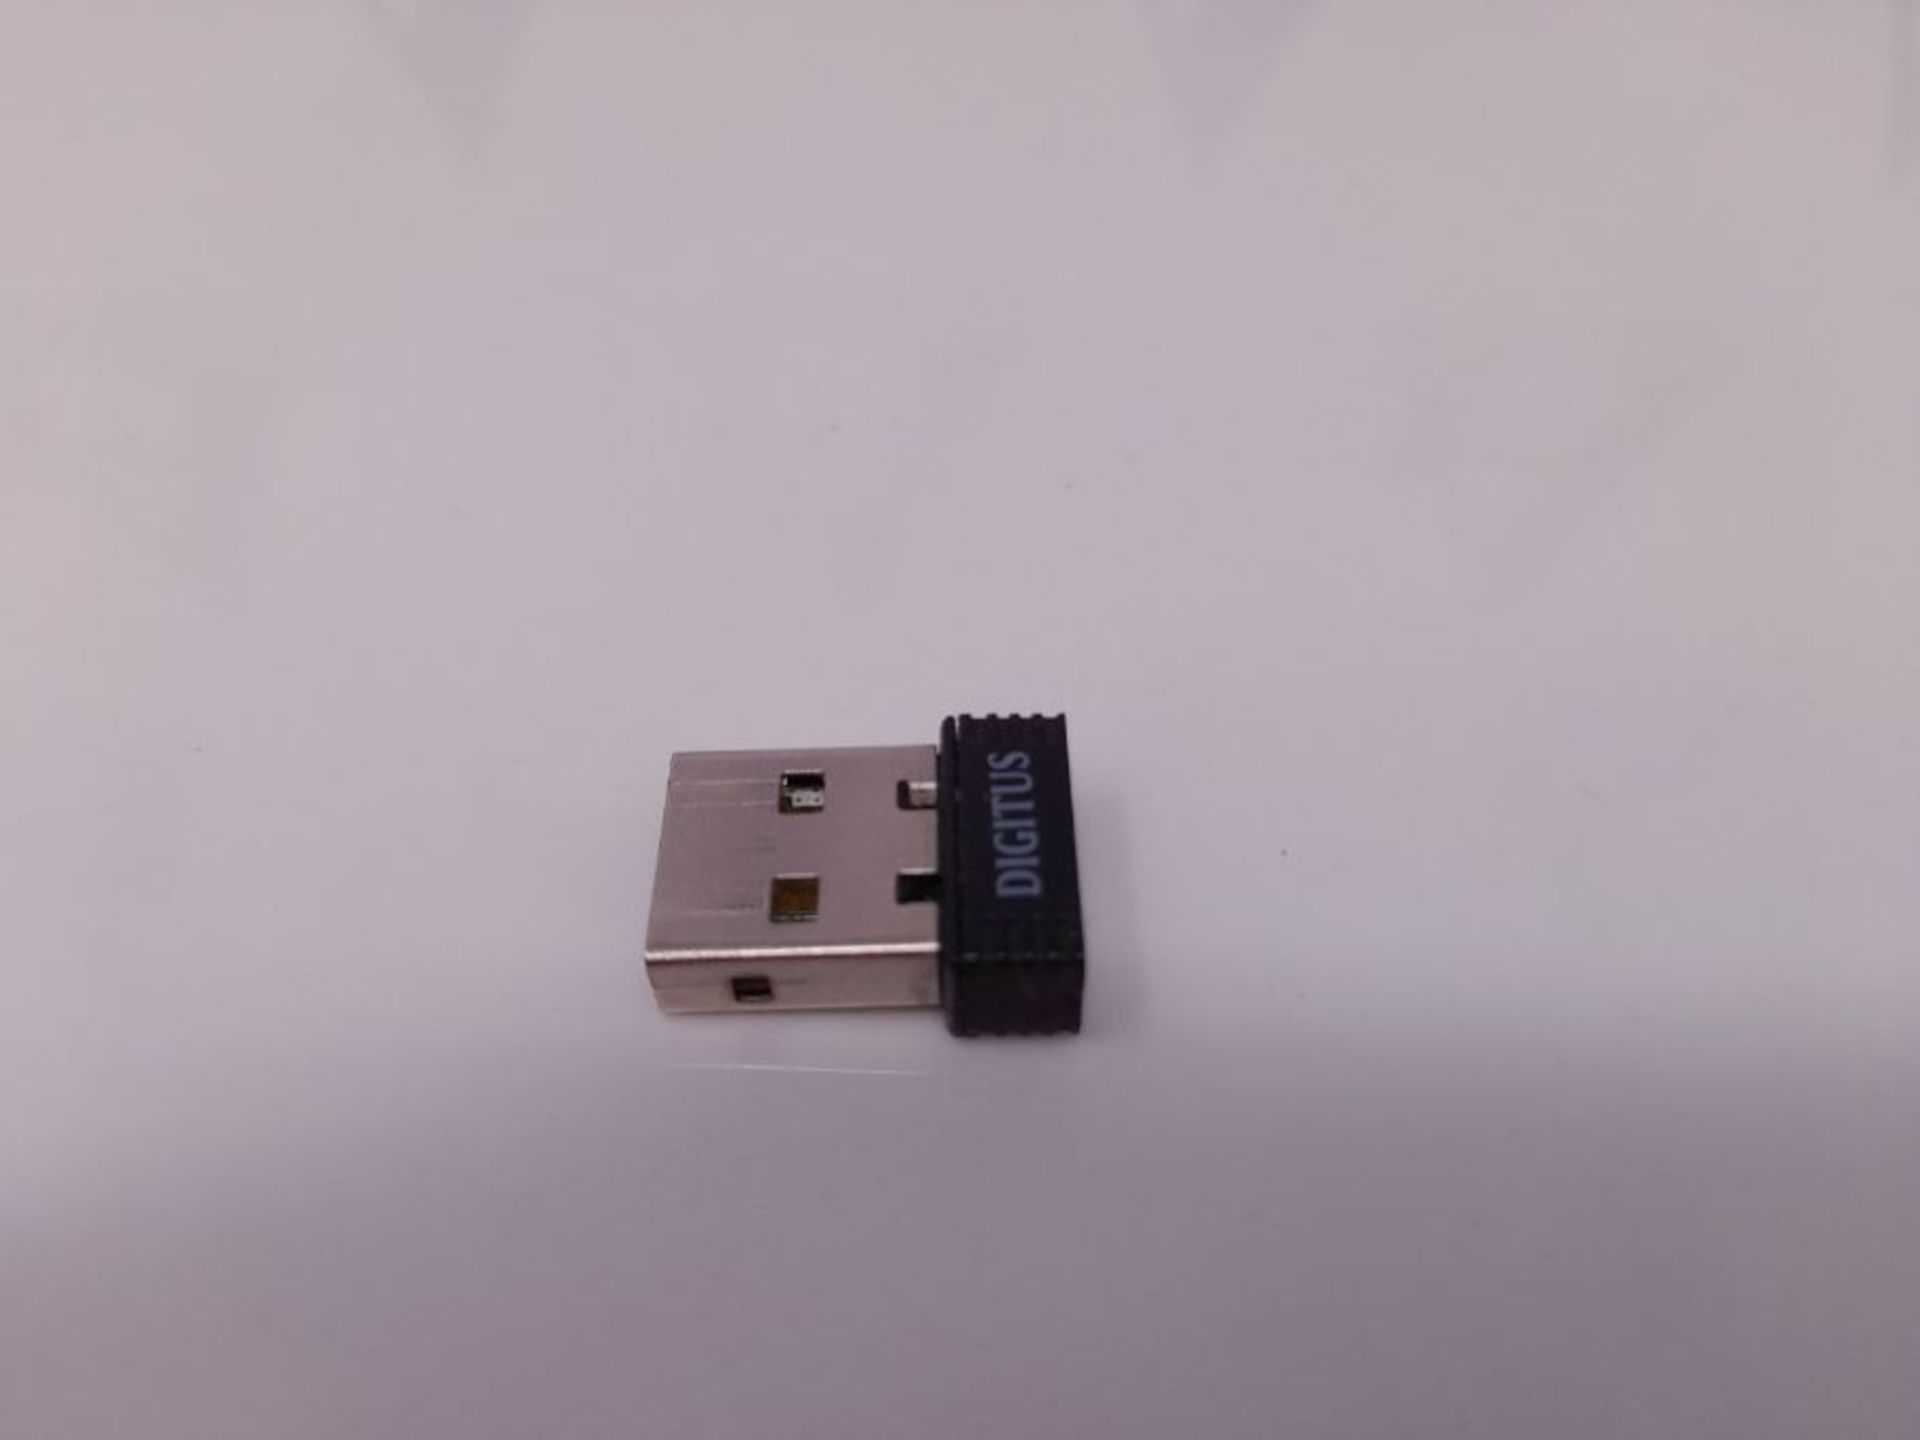 Digitus 70565 Network Adapter WLAN Stick USB 2.0 U Disk - Black - Image 2 of 2